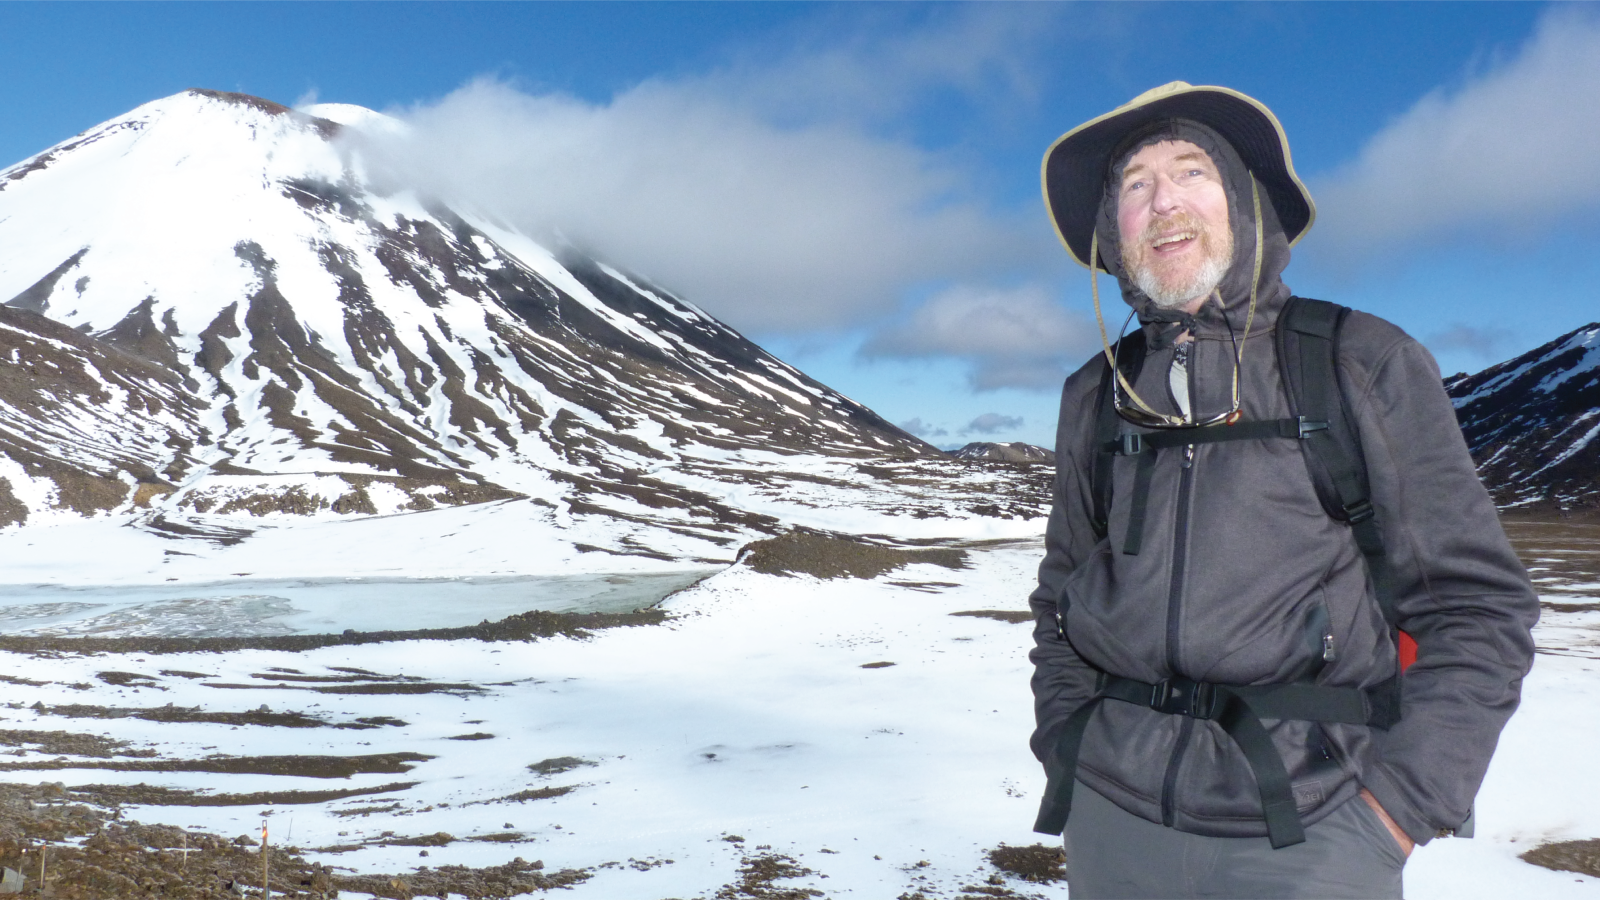 William Mahoney hiking near a snowy mountain